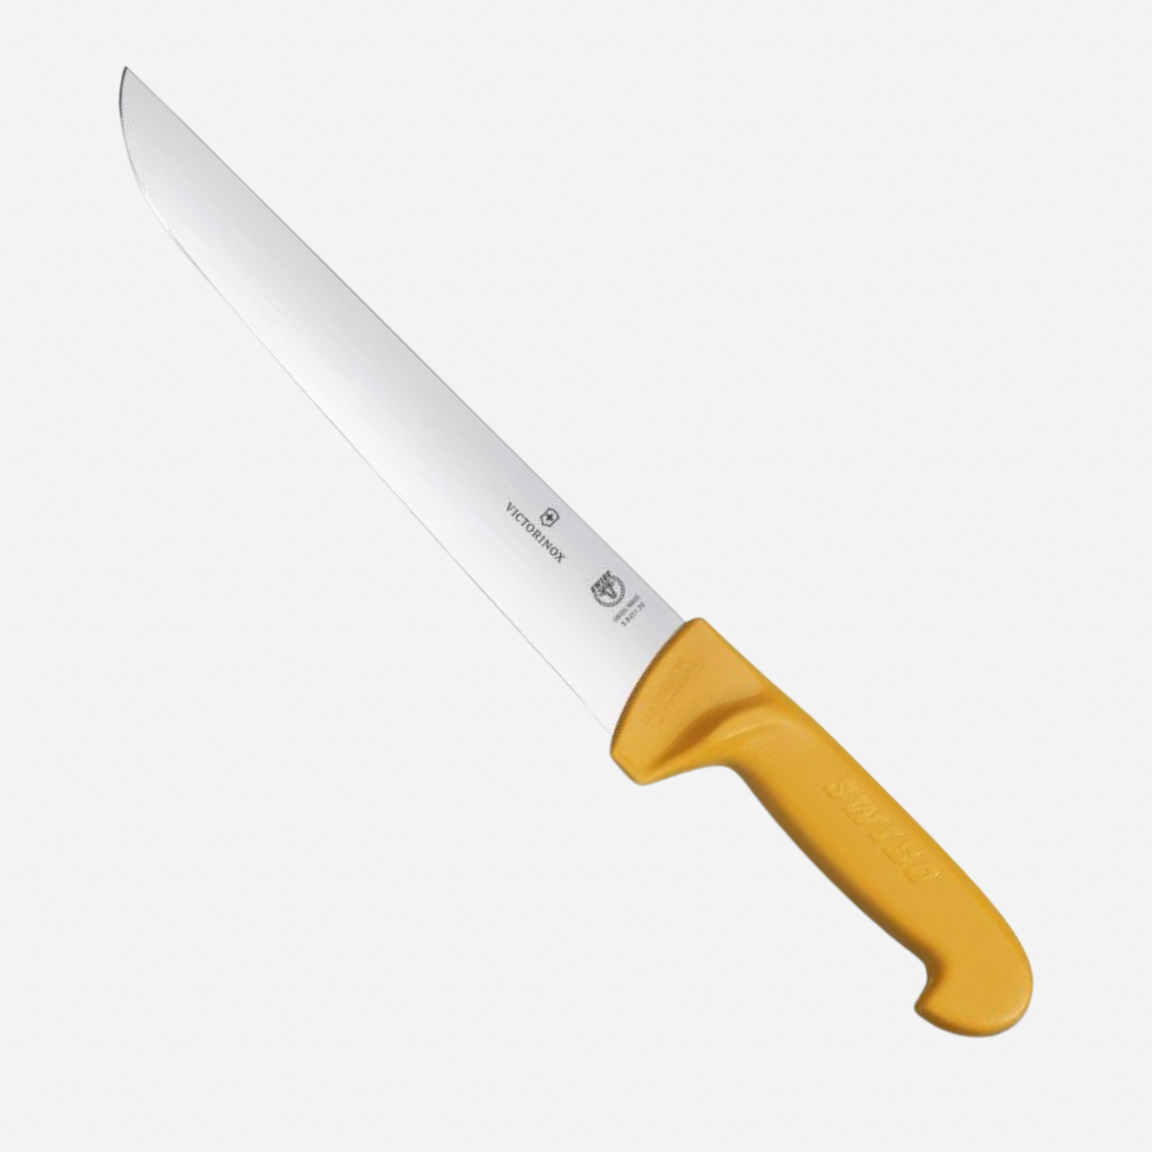 Diferentes tipos de cuchillos de chef o cuchillos de cocina utilizados por Hotel Chef's